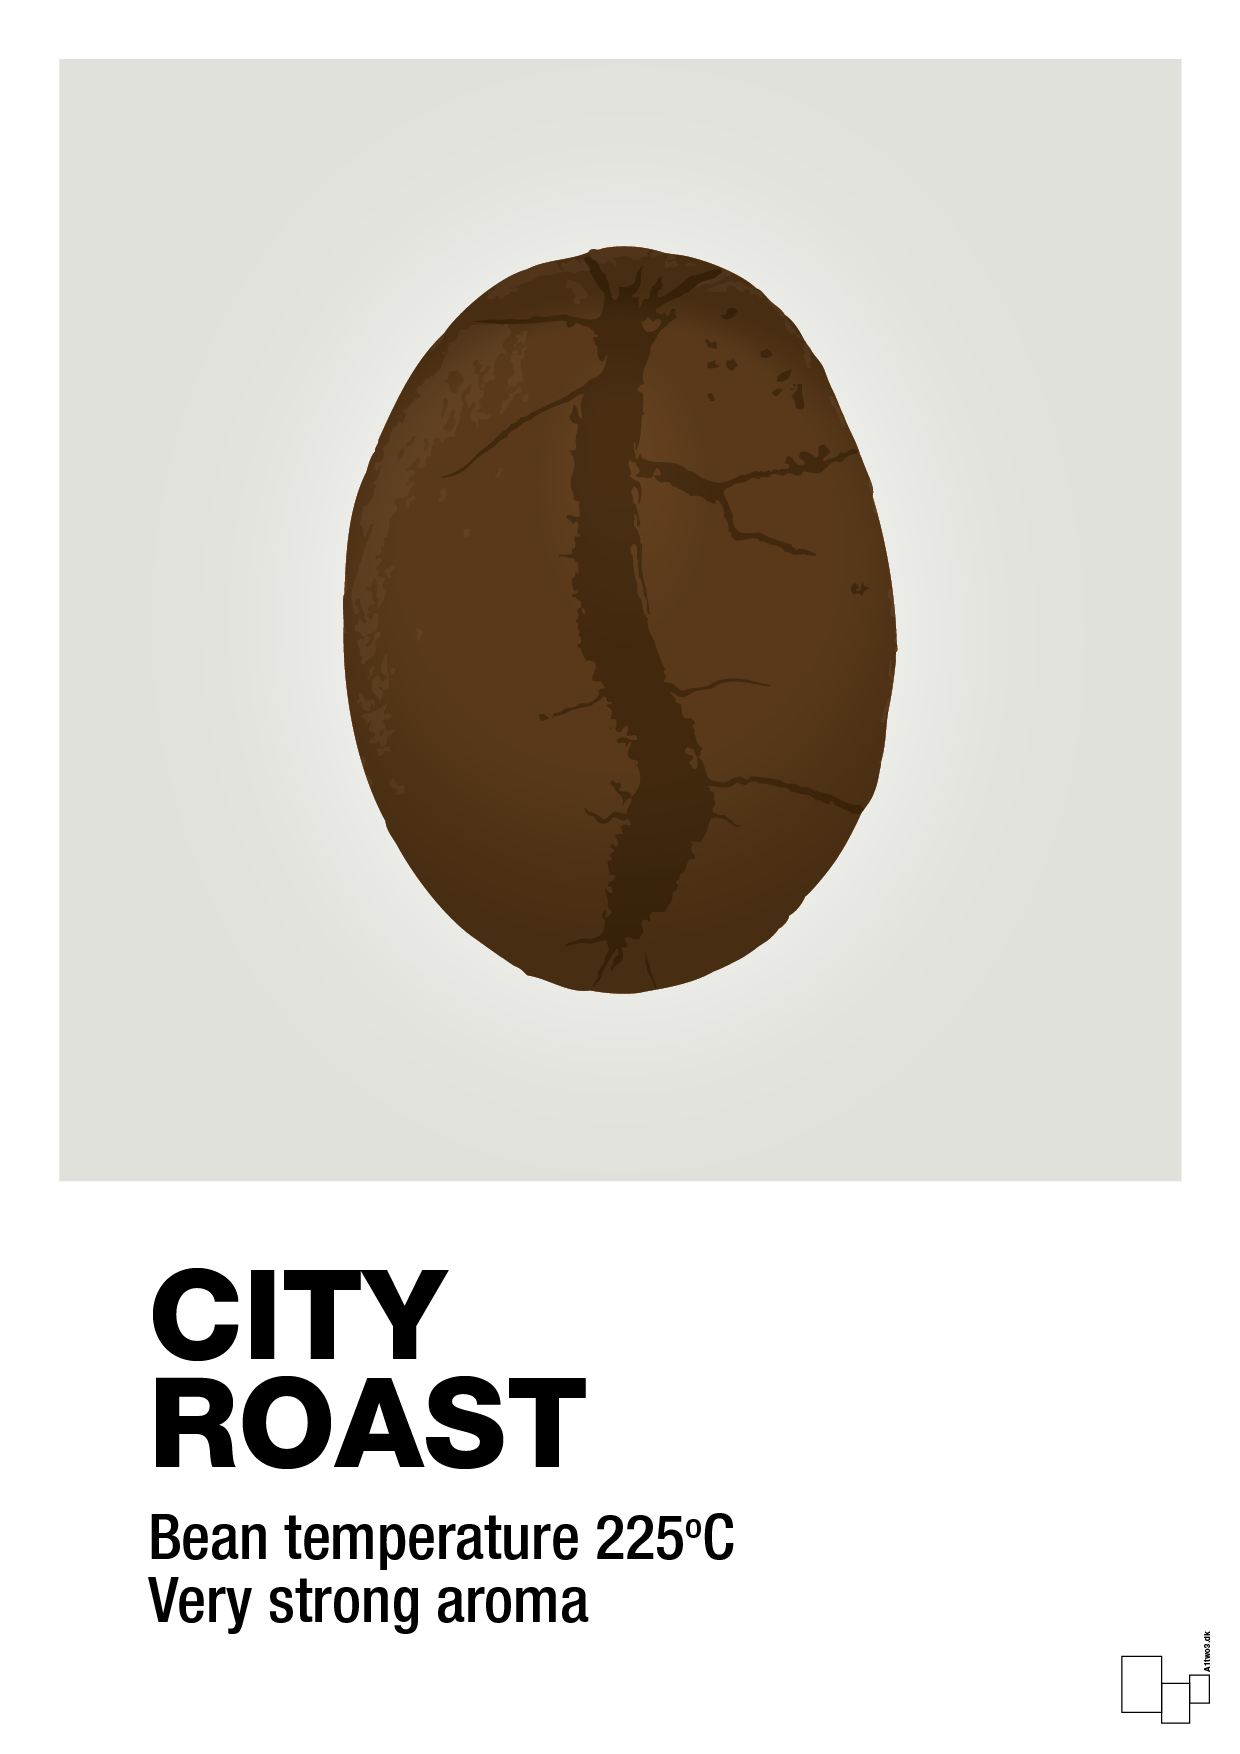 city roast - Plakat med Mad & Drikke i Painters White